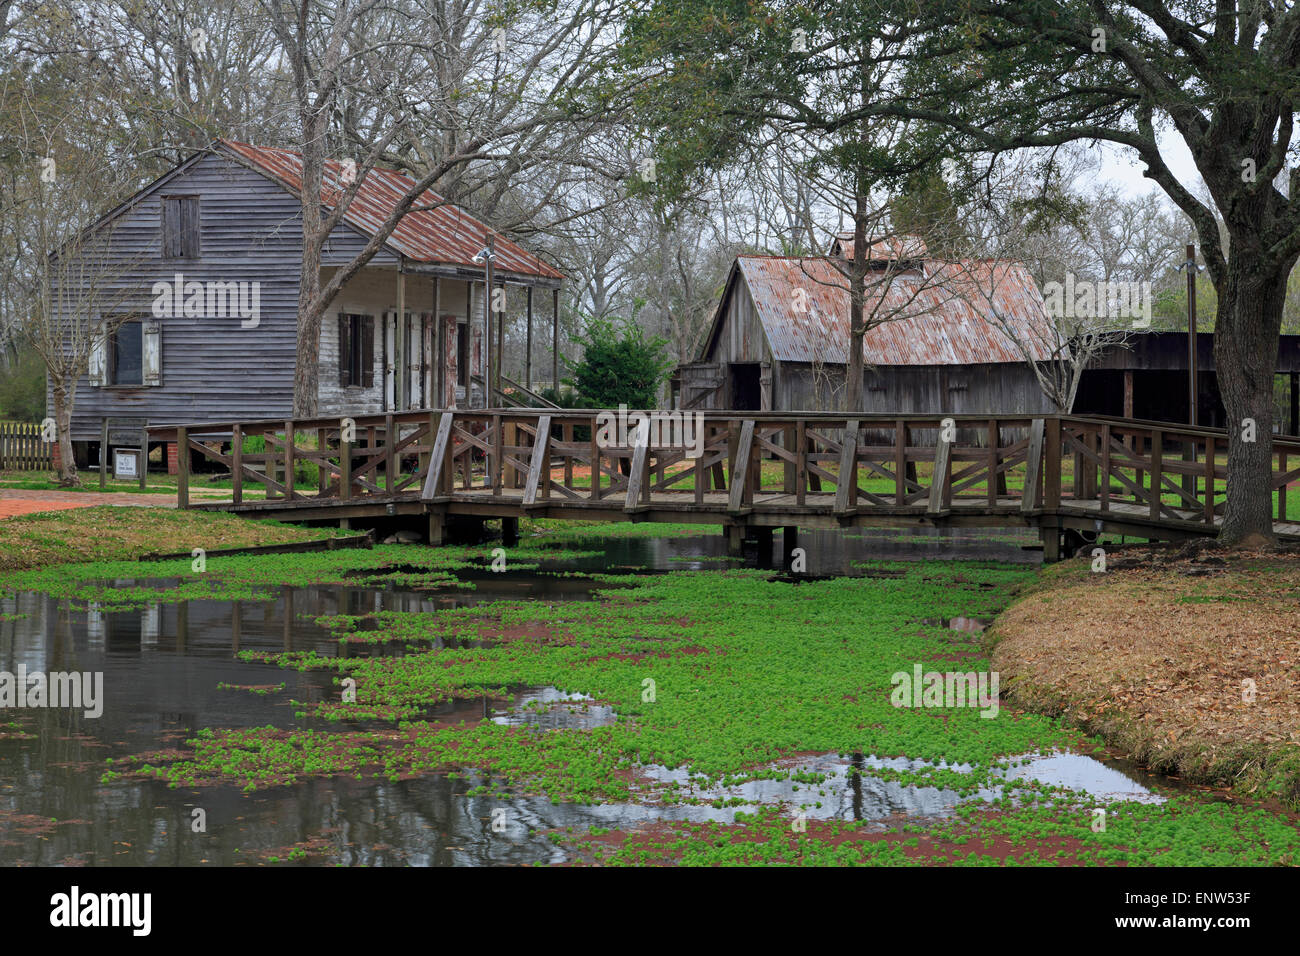 Acadian Village, Lafayette, Louisiana, USA Stock Photo, Royalty Free Image: 82302067 - Alamy